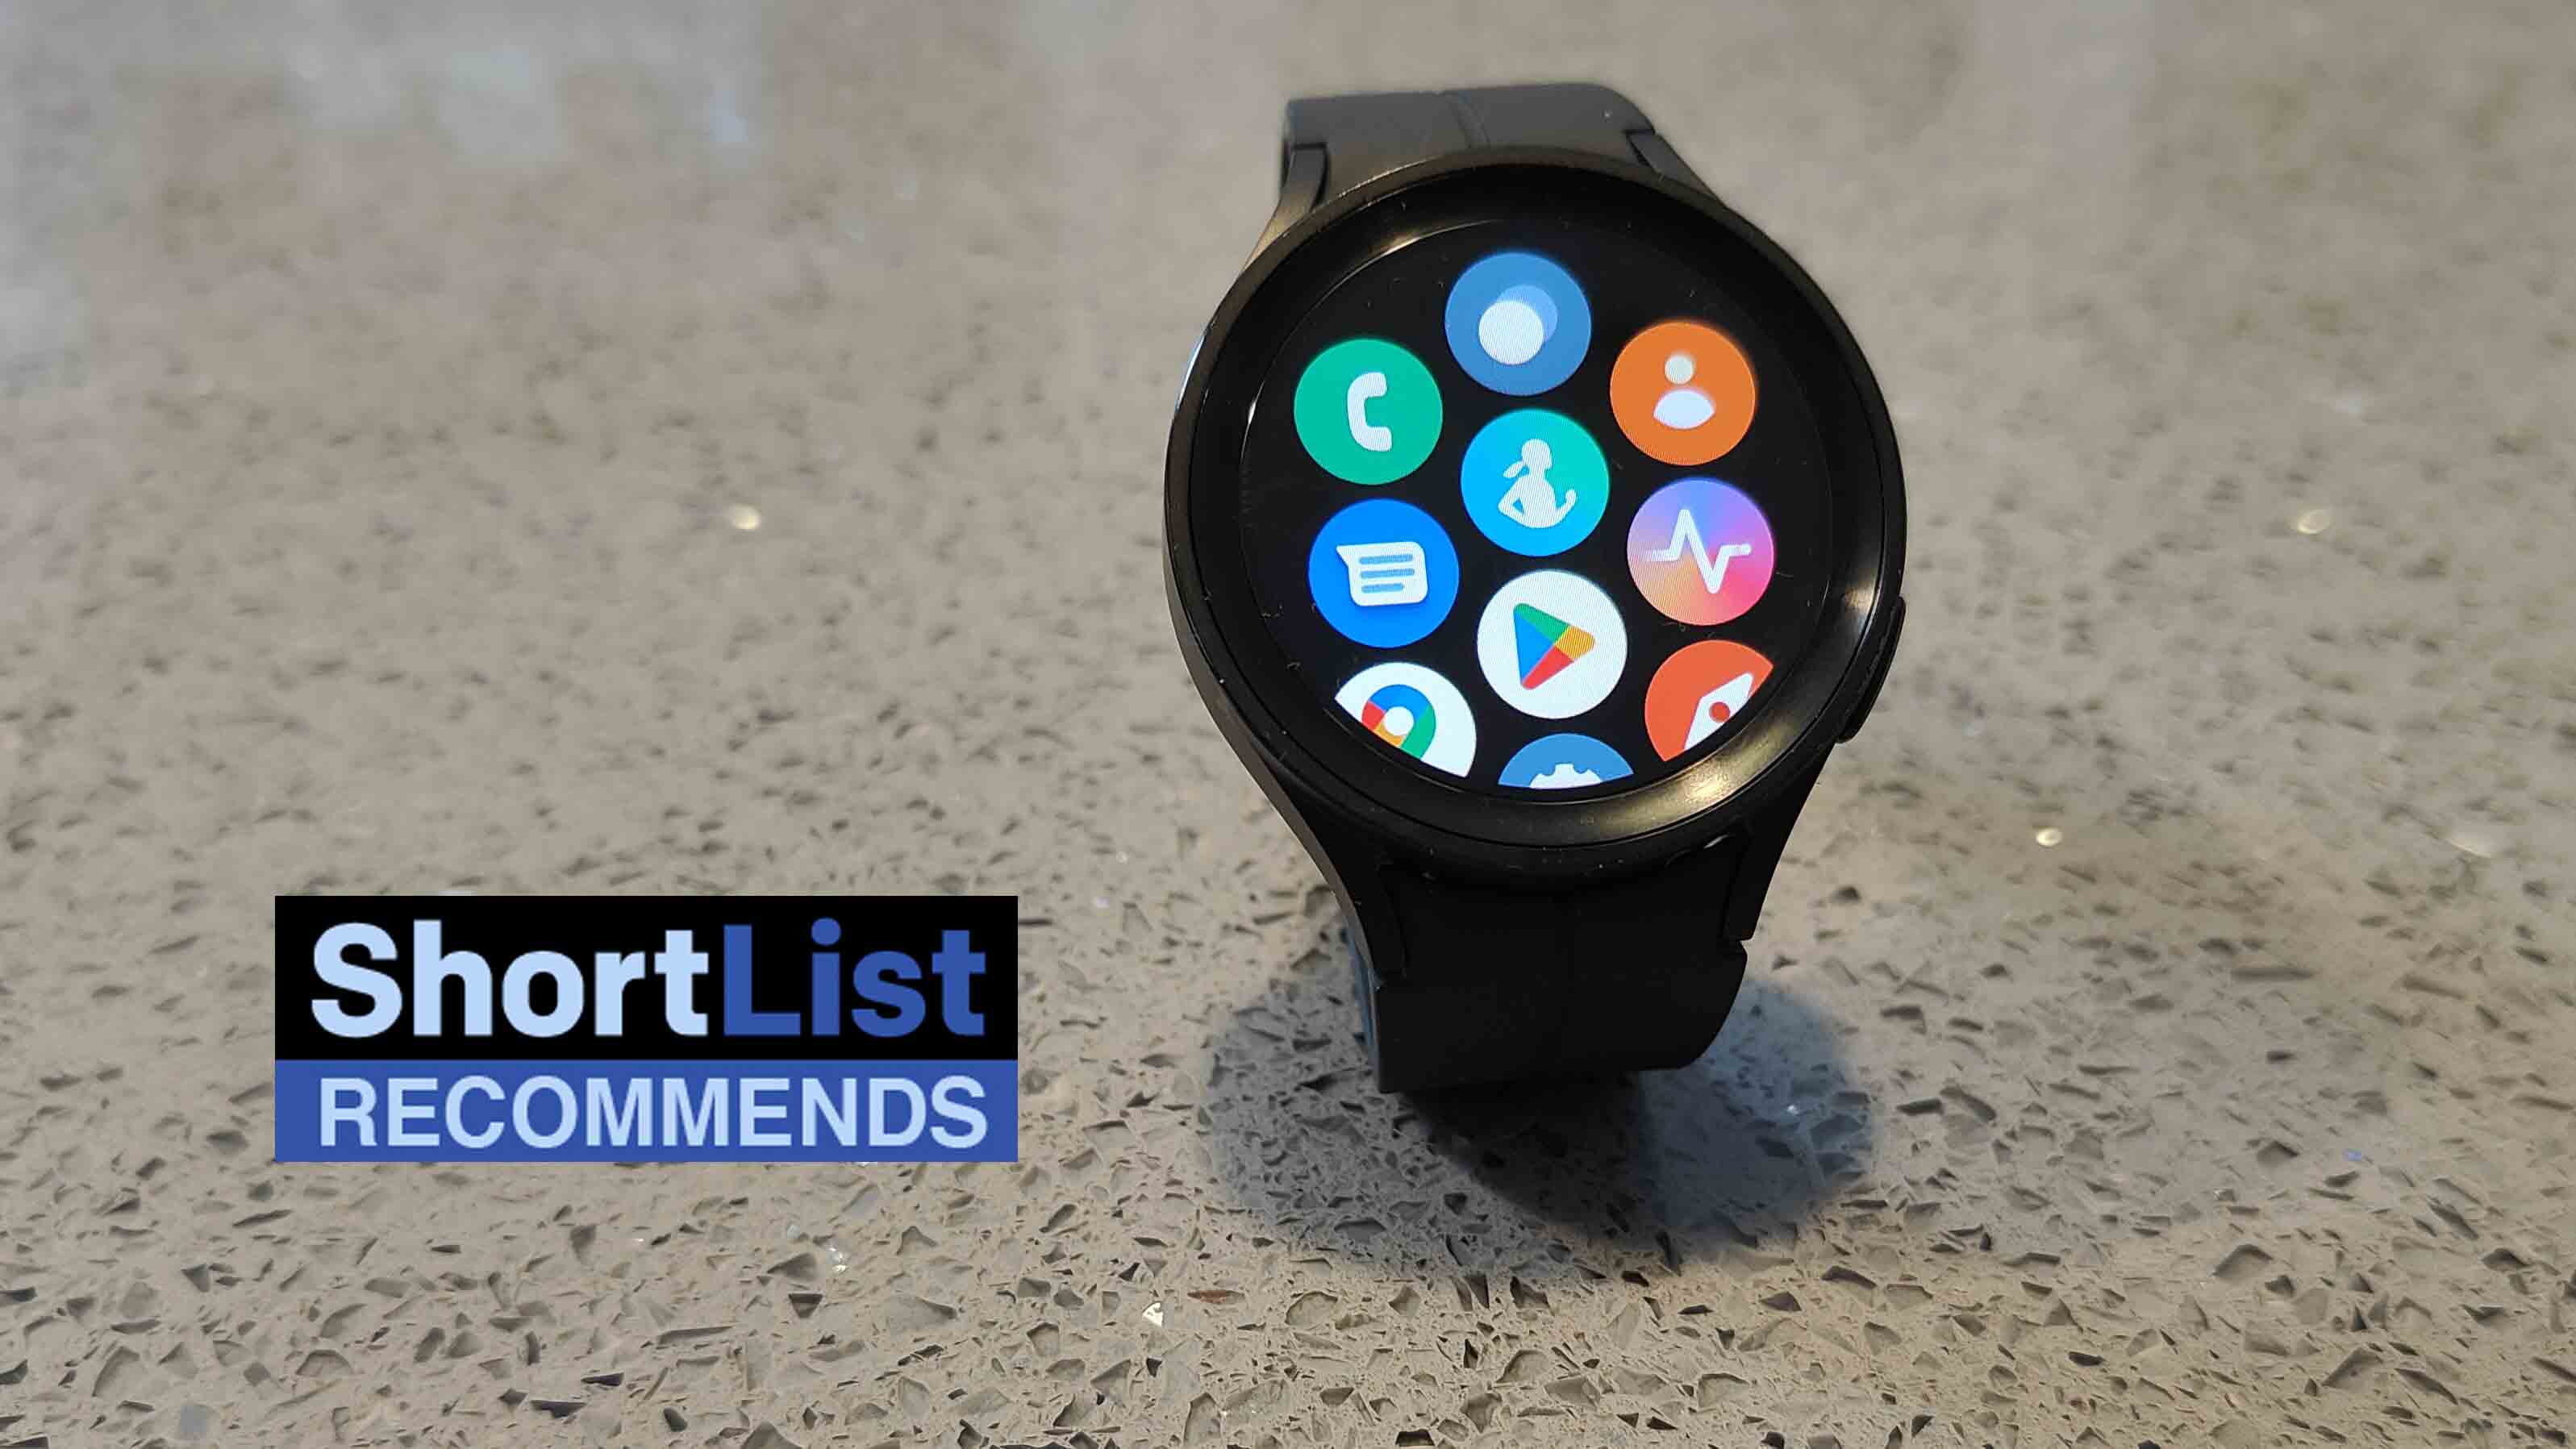 Galaxy Watch Pro 5 vale a pena? Conheça o smartwatch Samsung